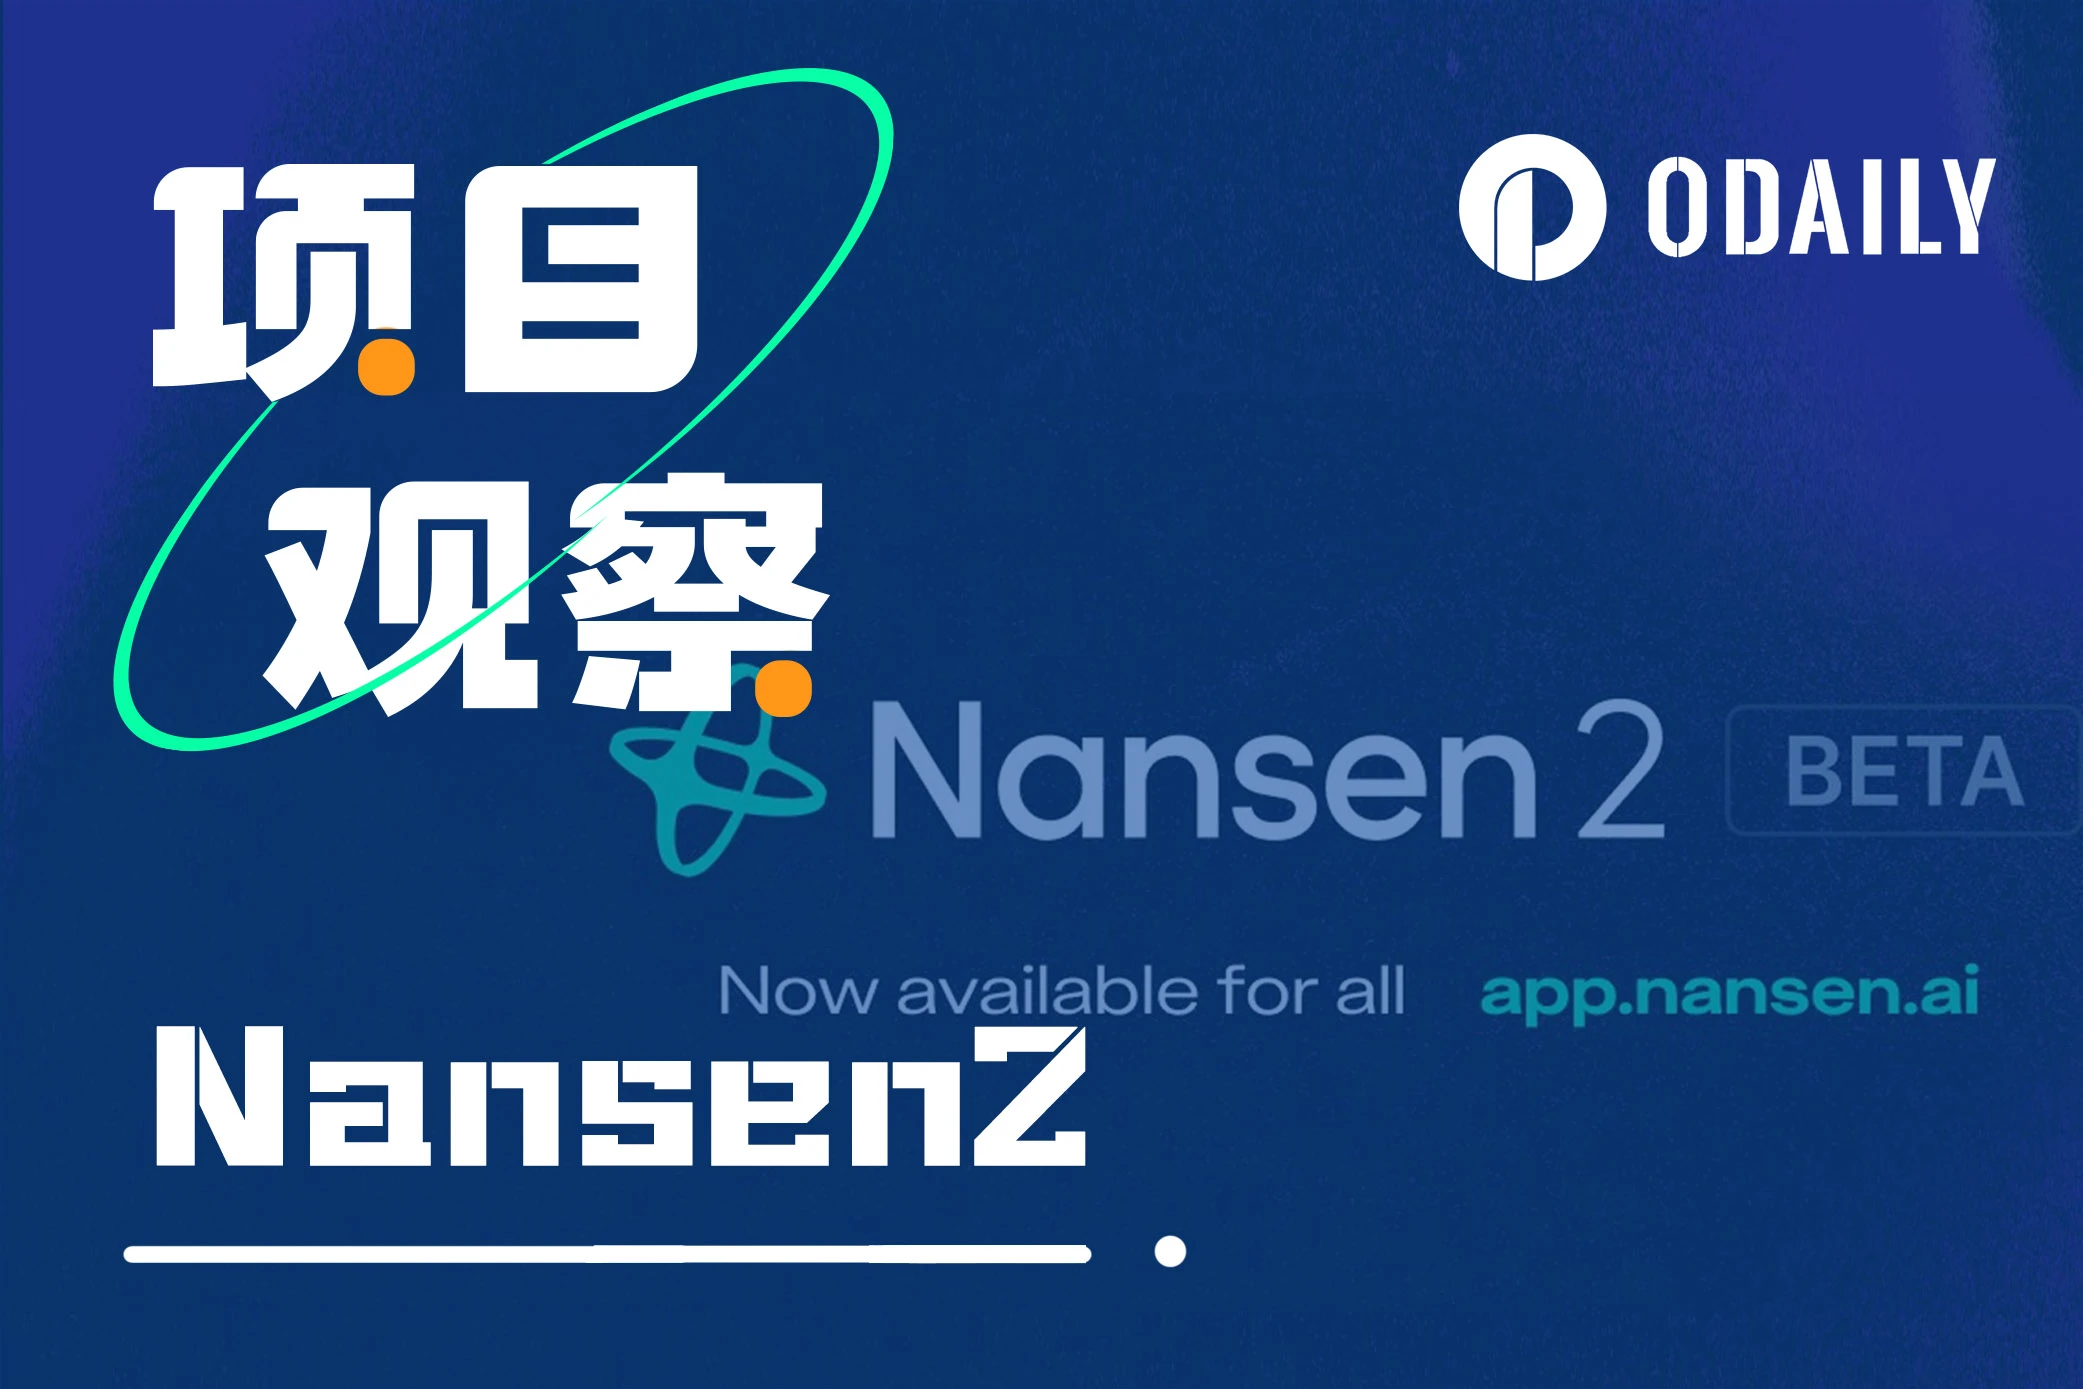 Nansen2 public beta, is AI search easy to use?